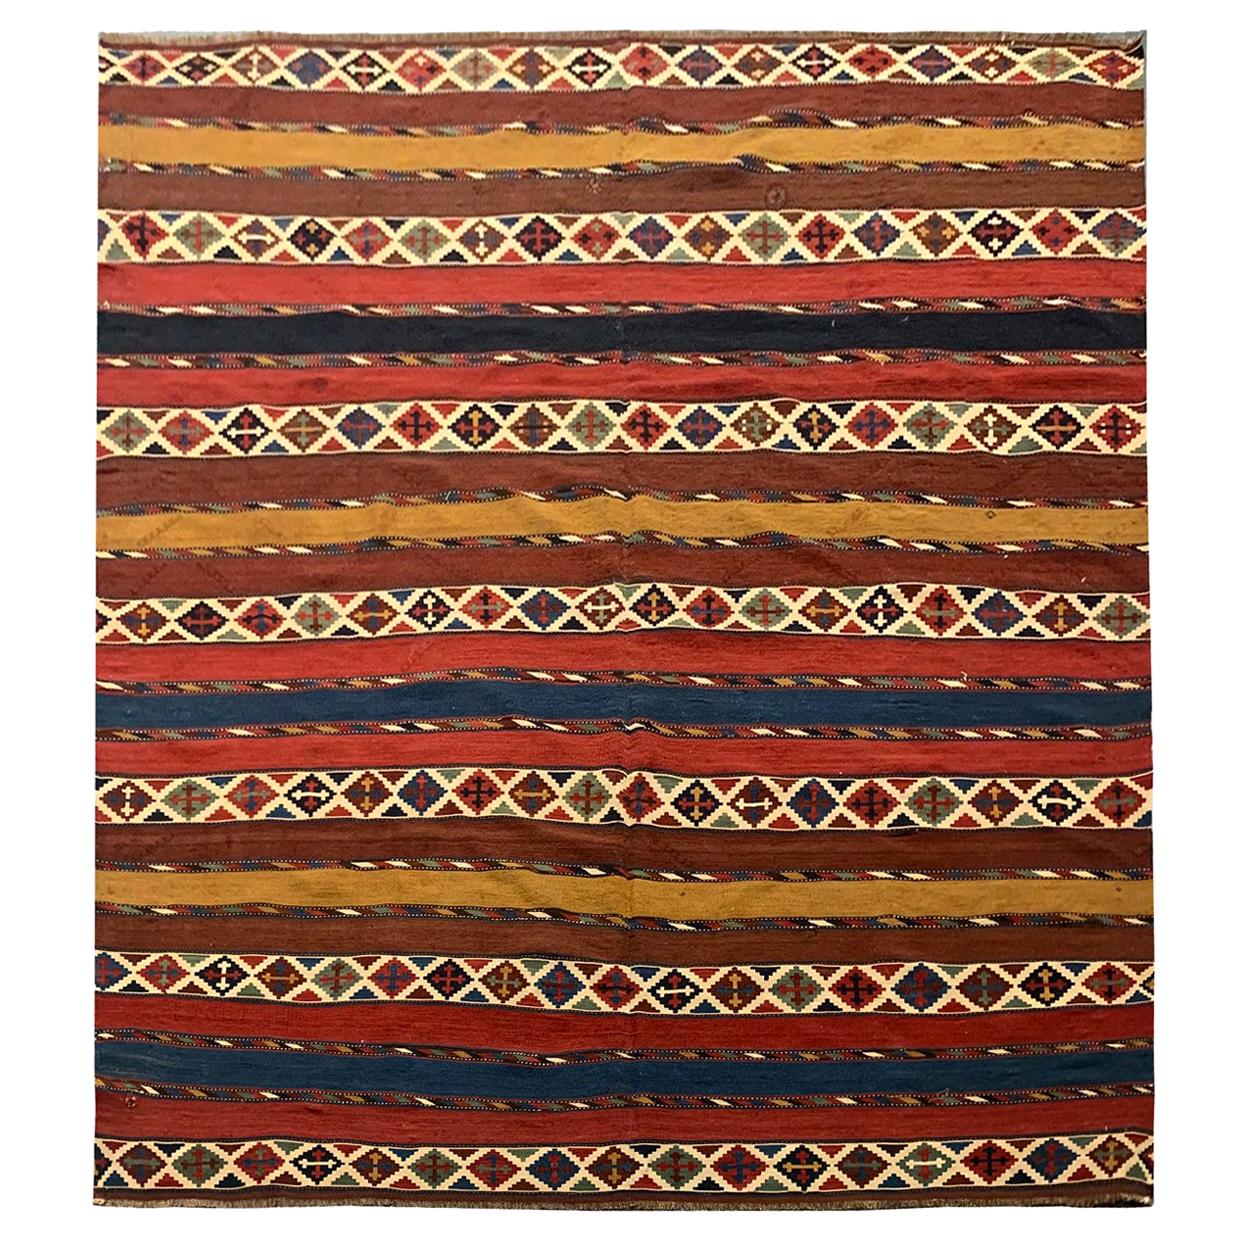 Rare Antique Caucasian Kilim Rug, Striped Kilim Traditional Wool Carpet